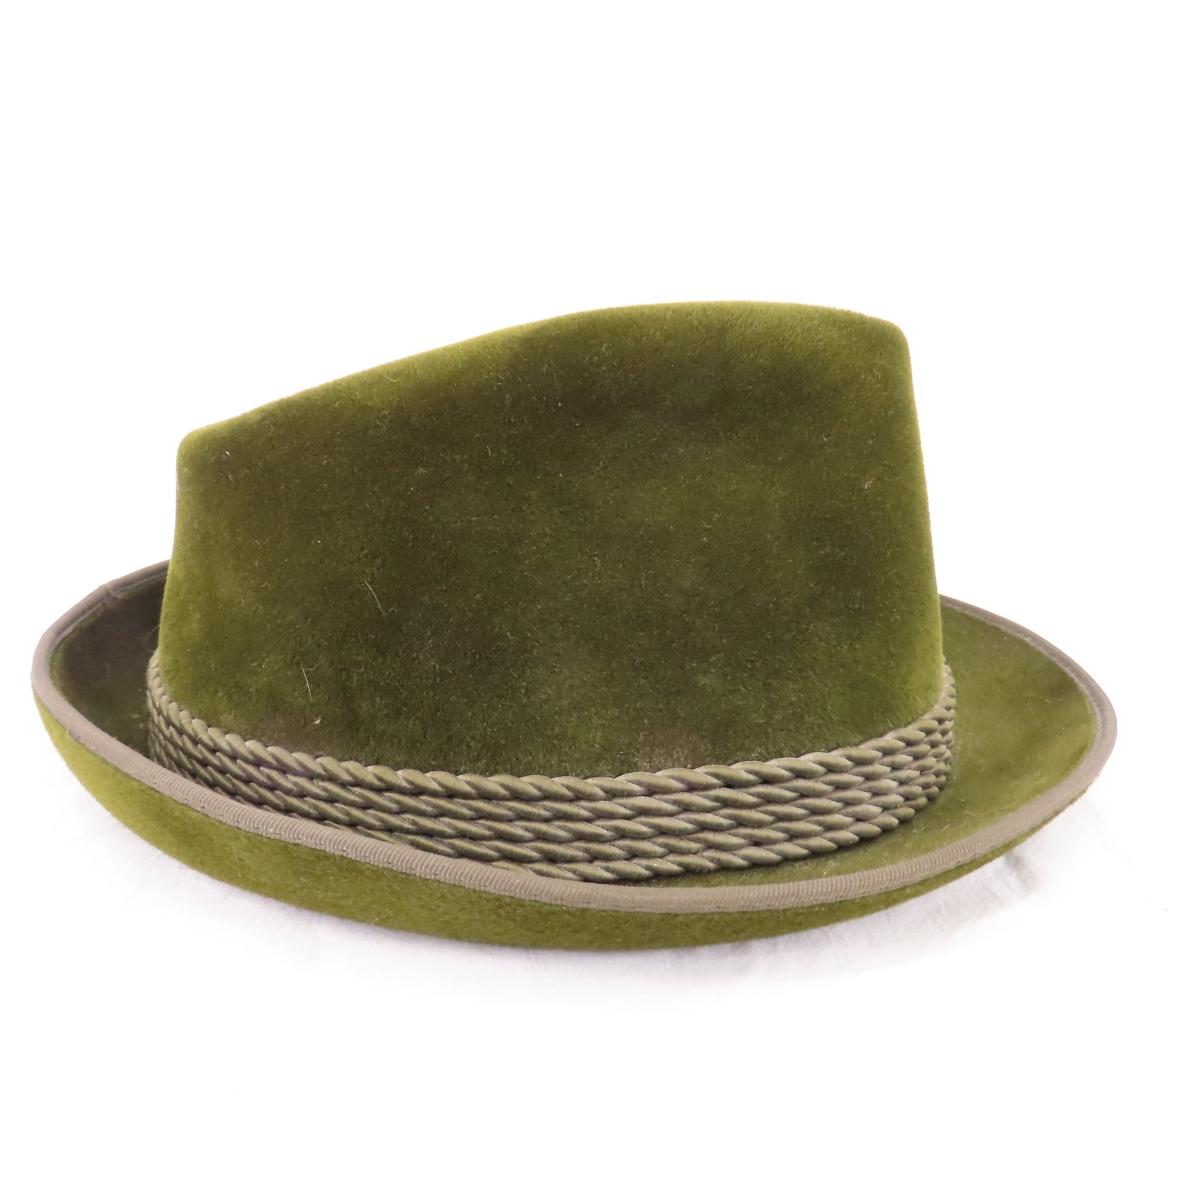 German Lederhosen, Edelweib-Hut Hat, & More